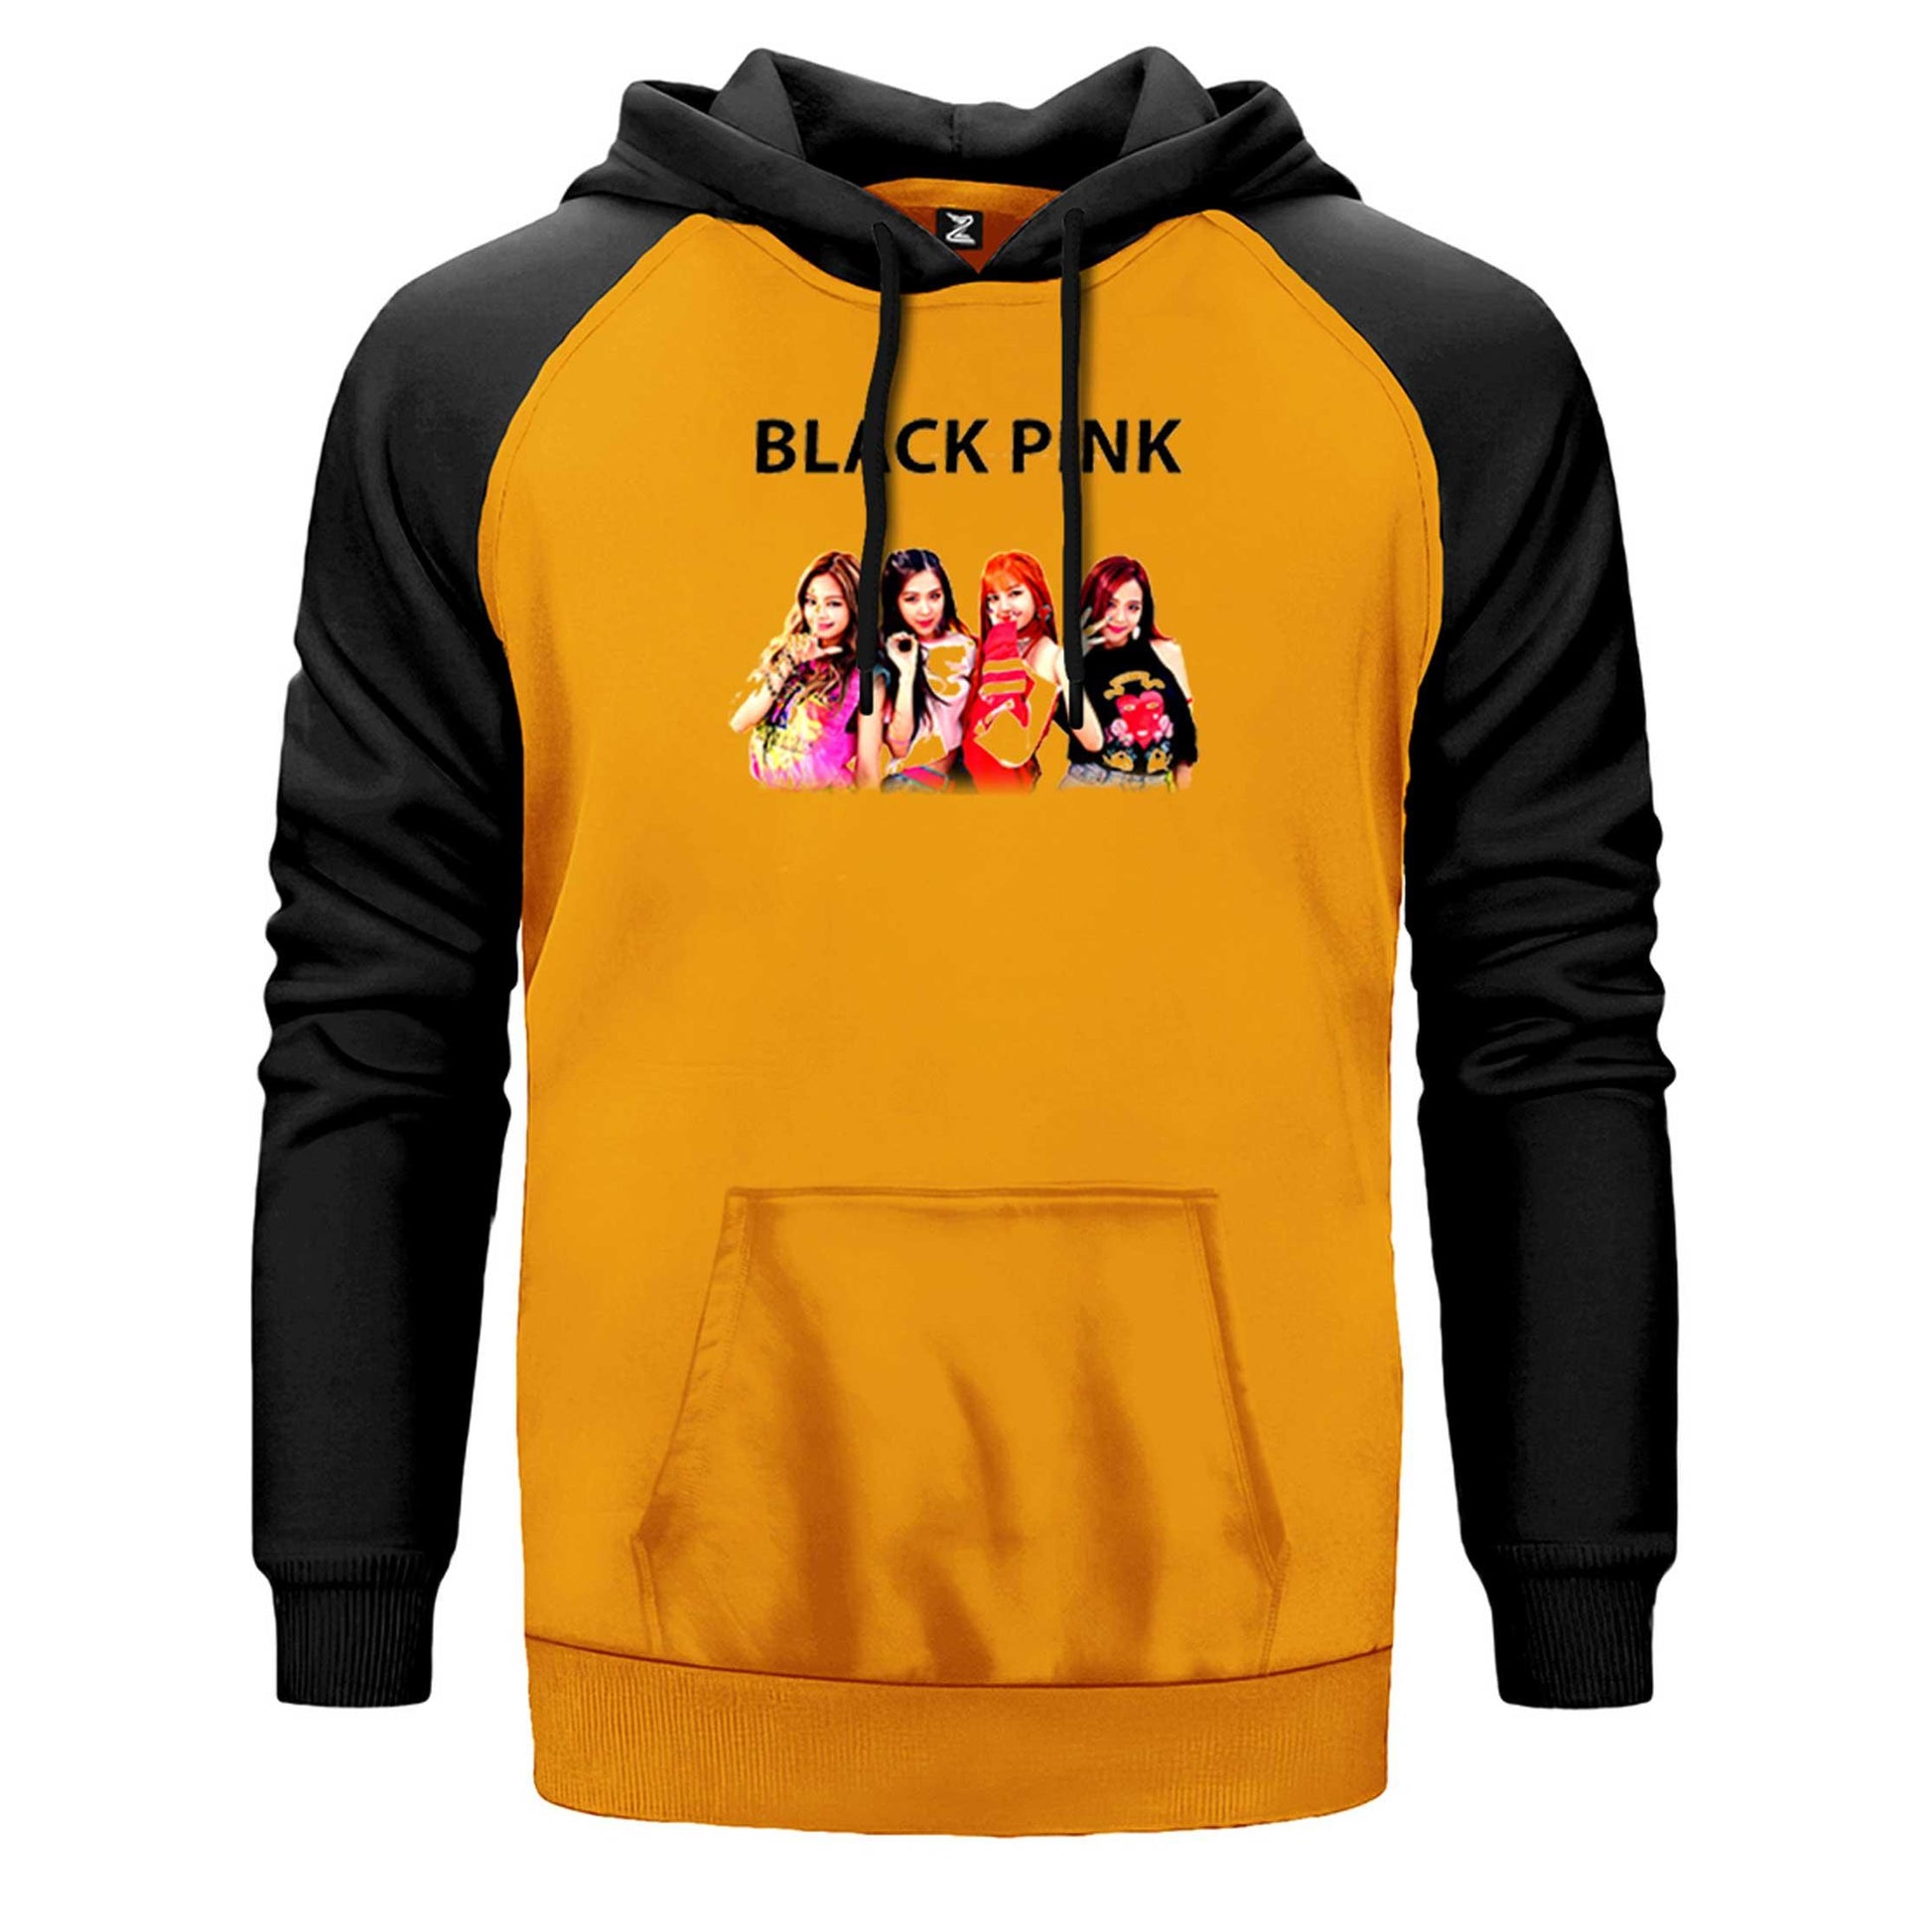 Blackpink Black Çift Renk Reglan Kol Sweatshirt - Zepplingiyim